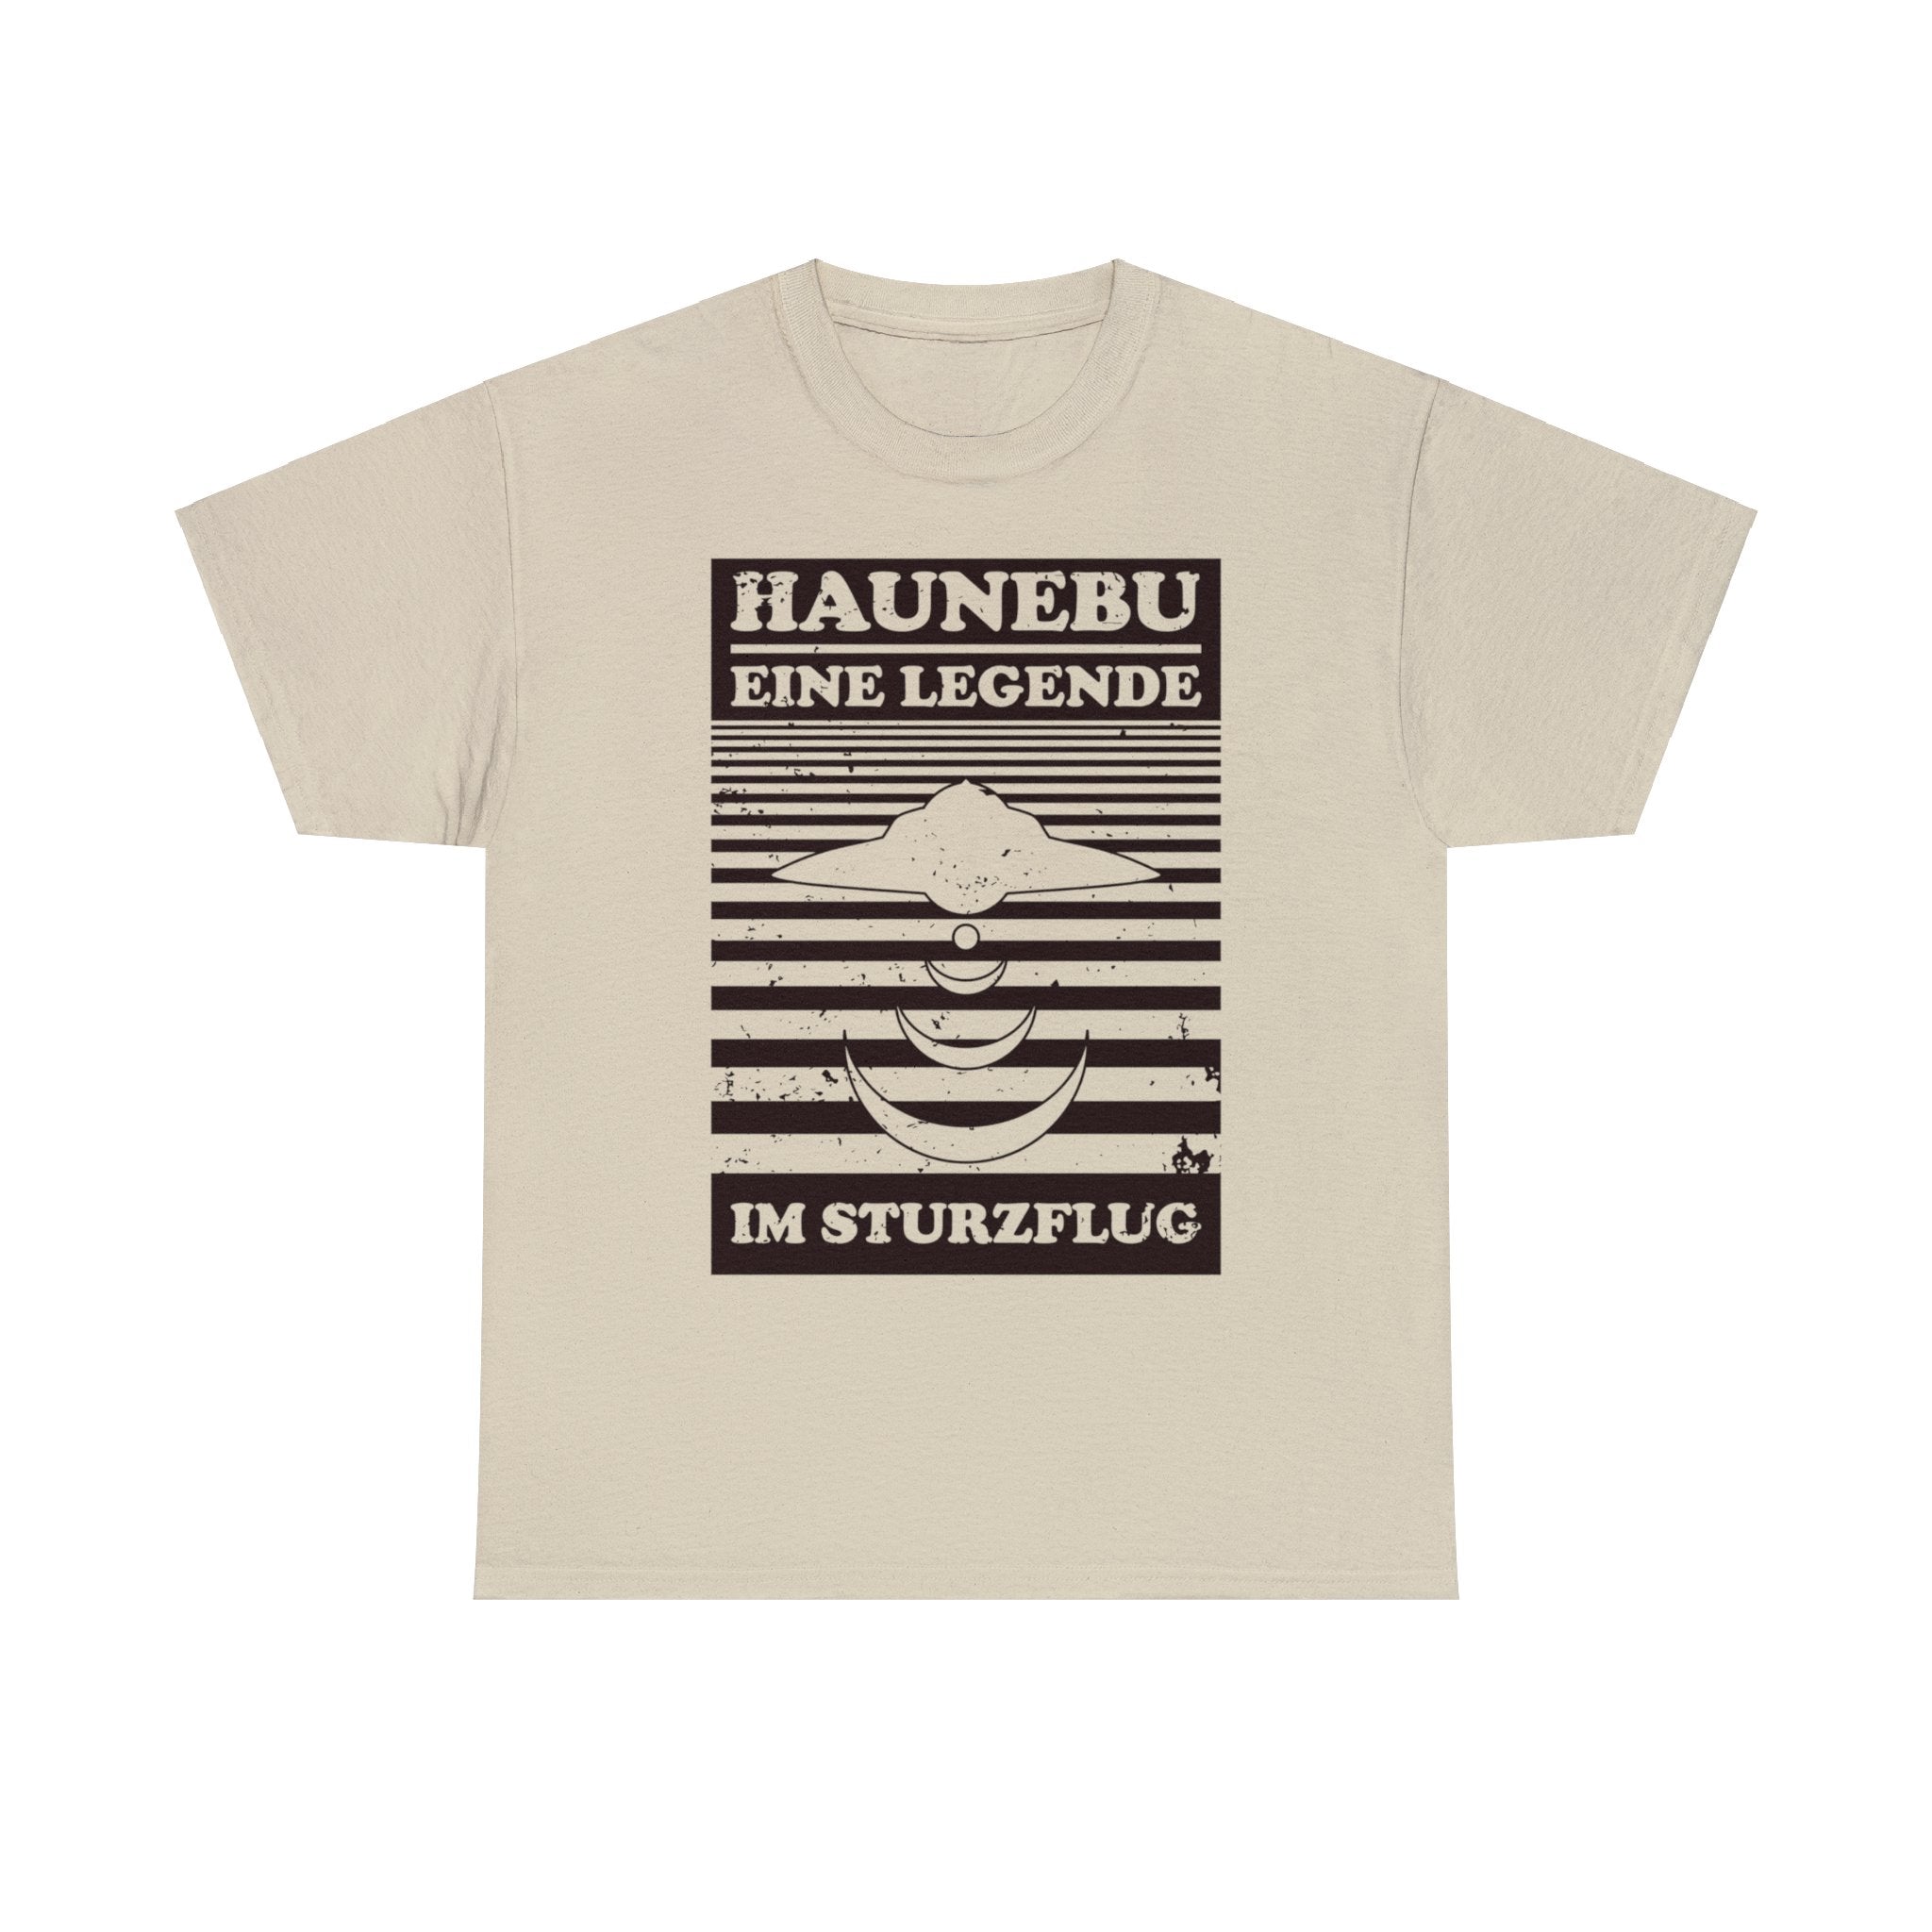 Haunebu - Legende 2 - T-Shirt